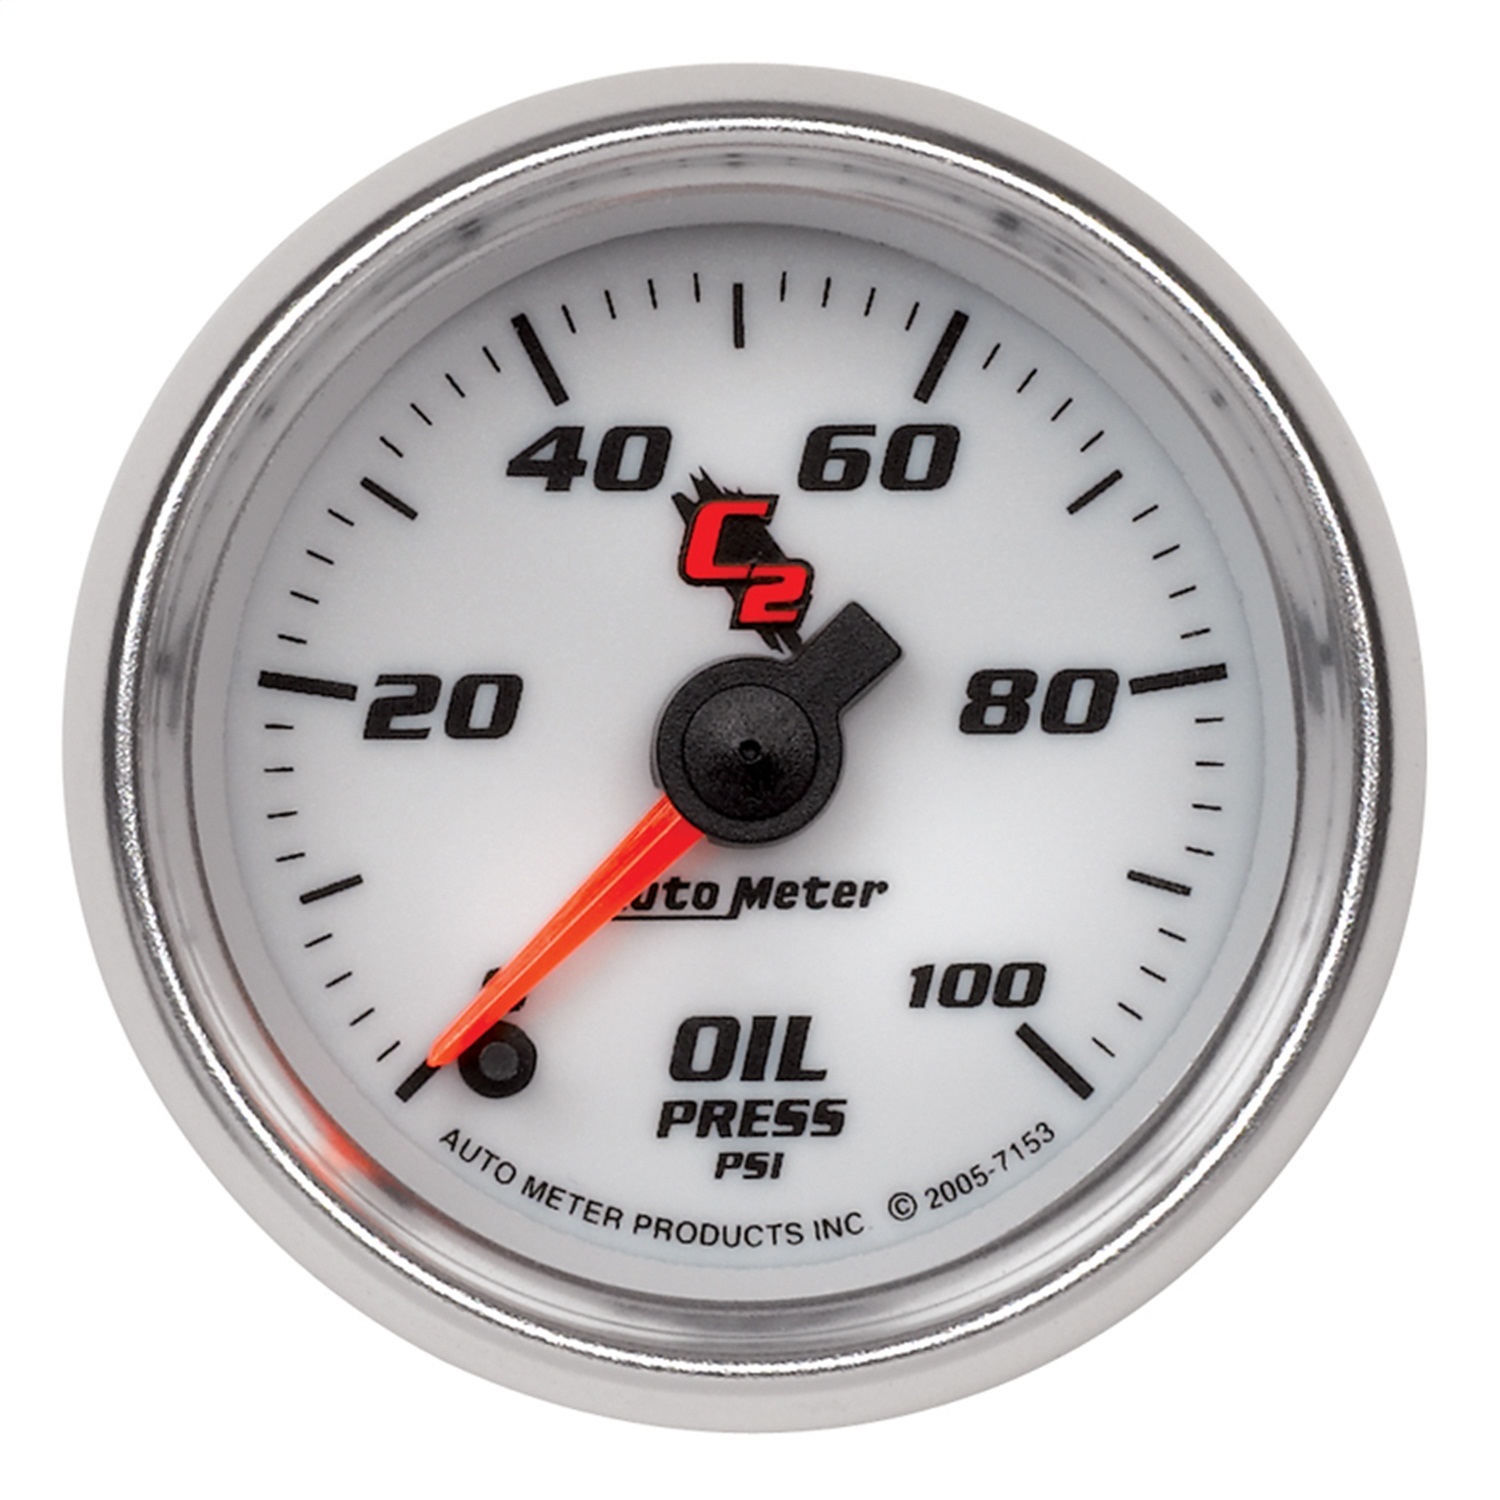 Electric oil pressure gauge